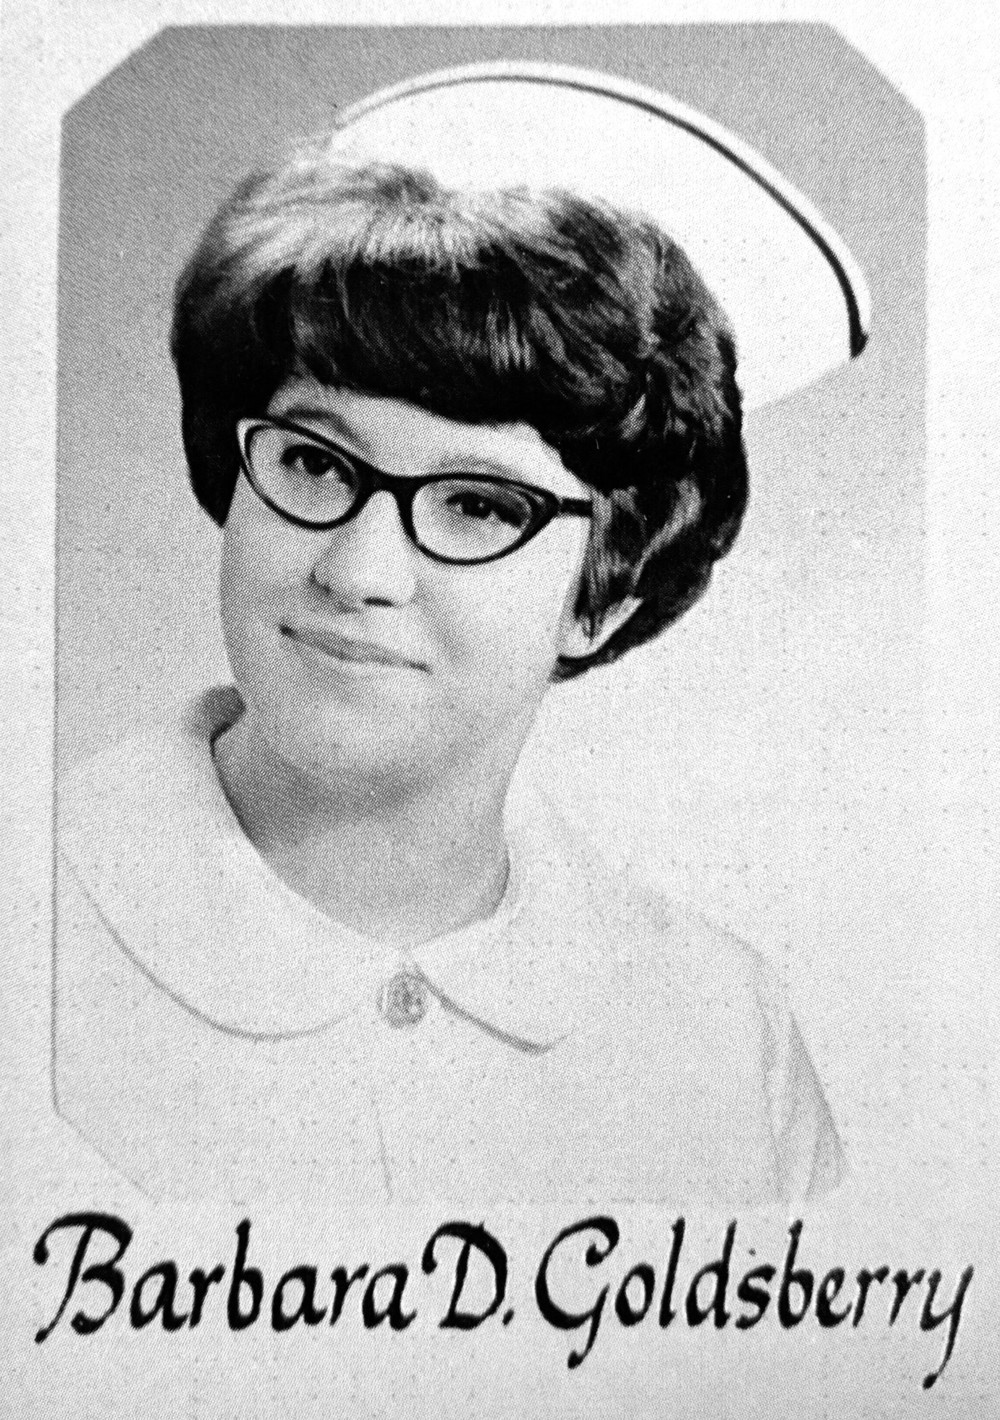   Nursing school graduation photo, 1966.  